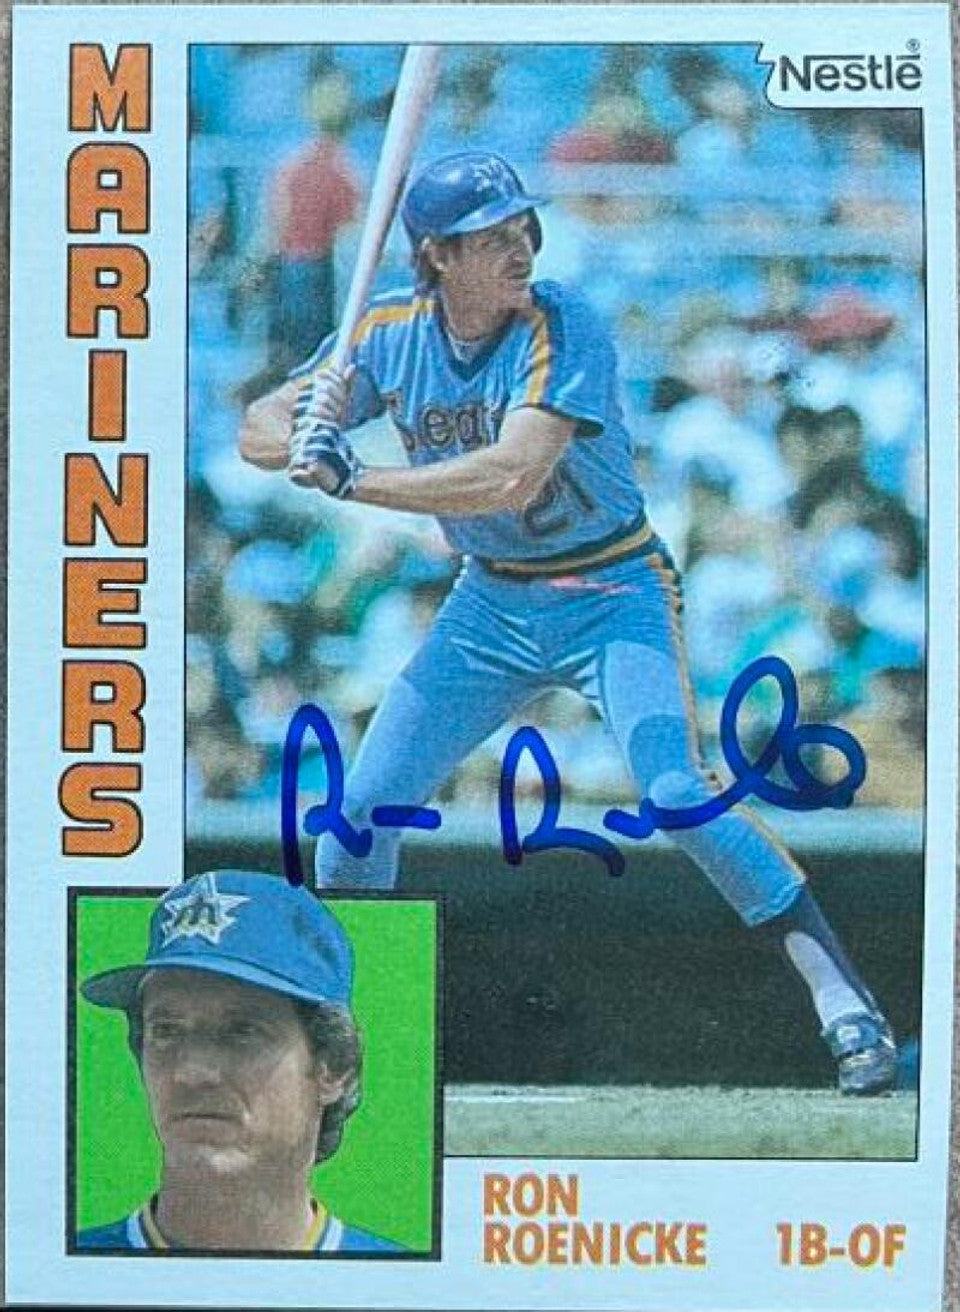 Ron Roenicke Signed 1984 Nestle Baseball Card - Seattle Mariners